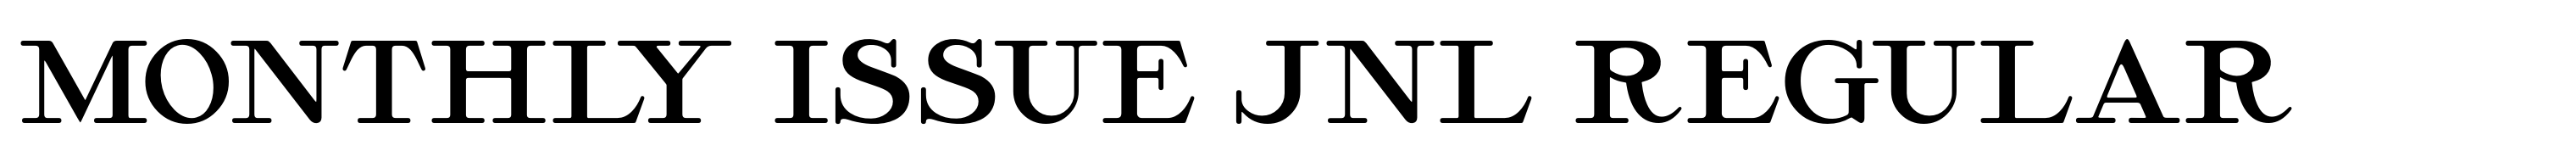 Monthly Issue JNL Regular